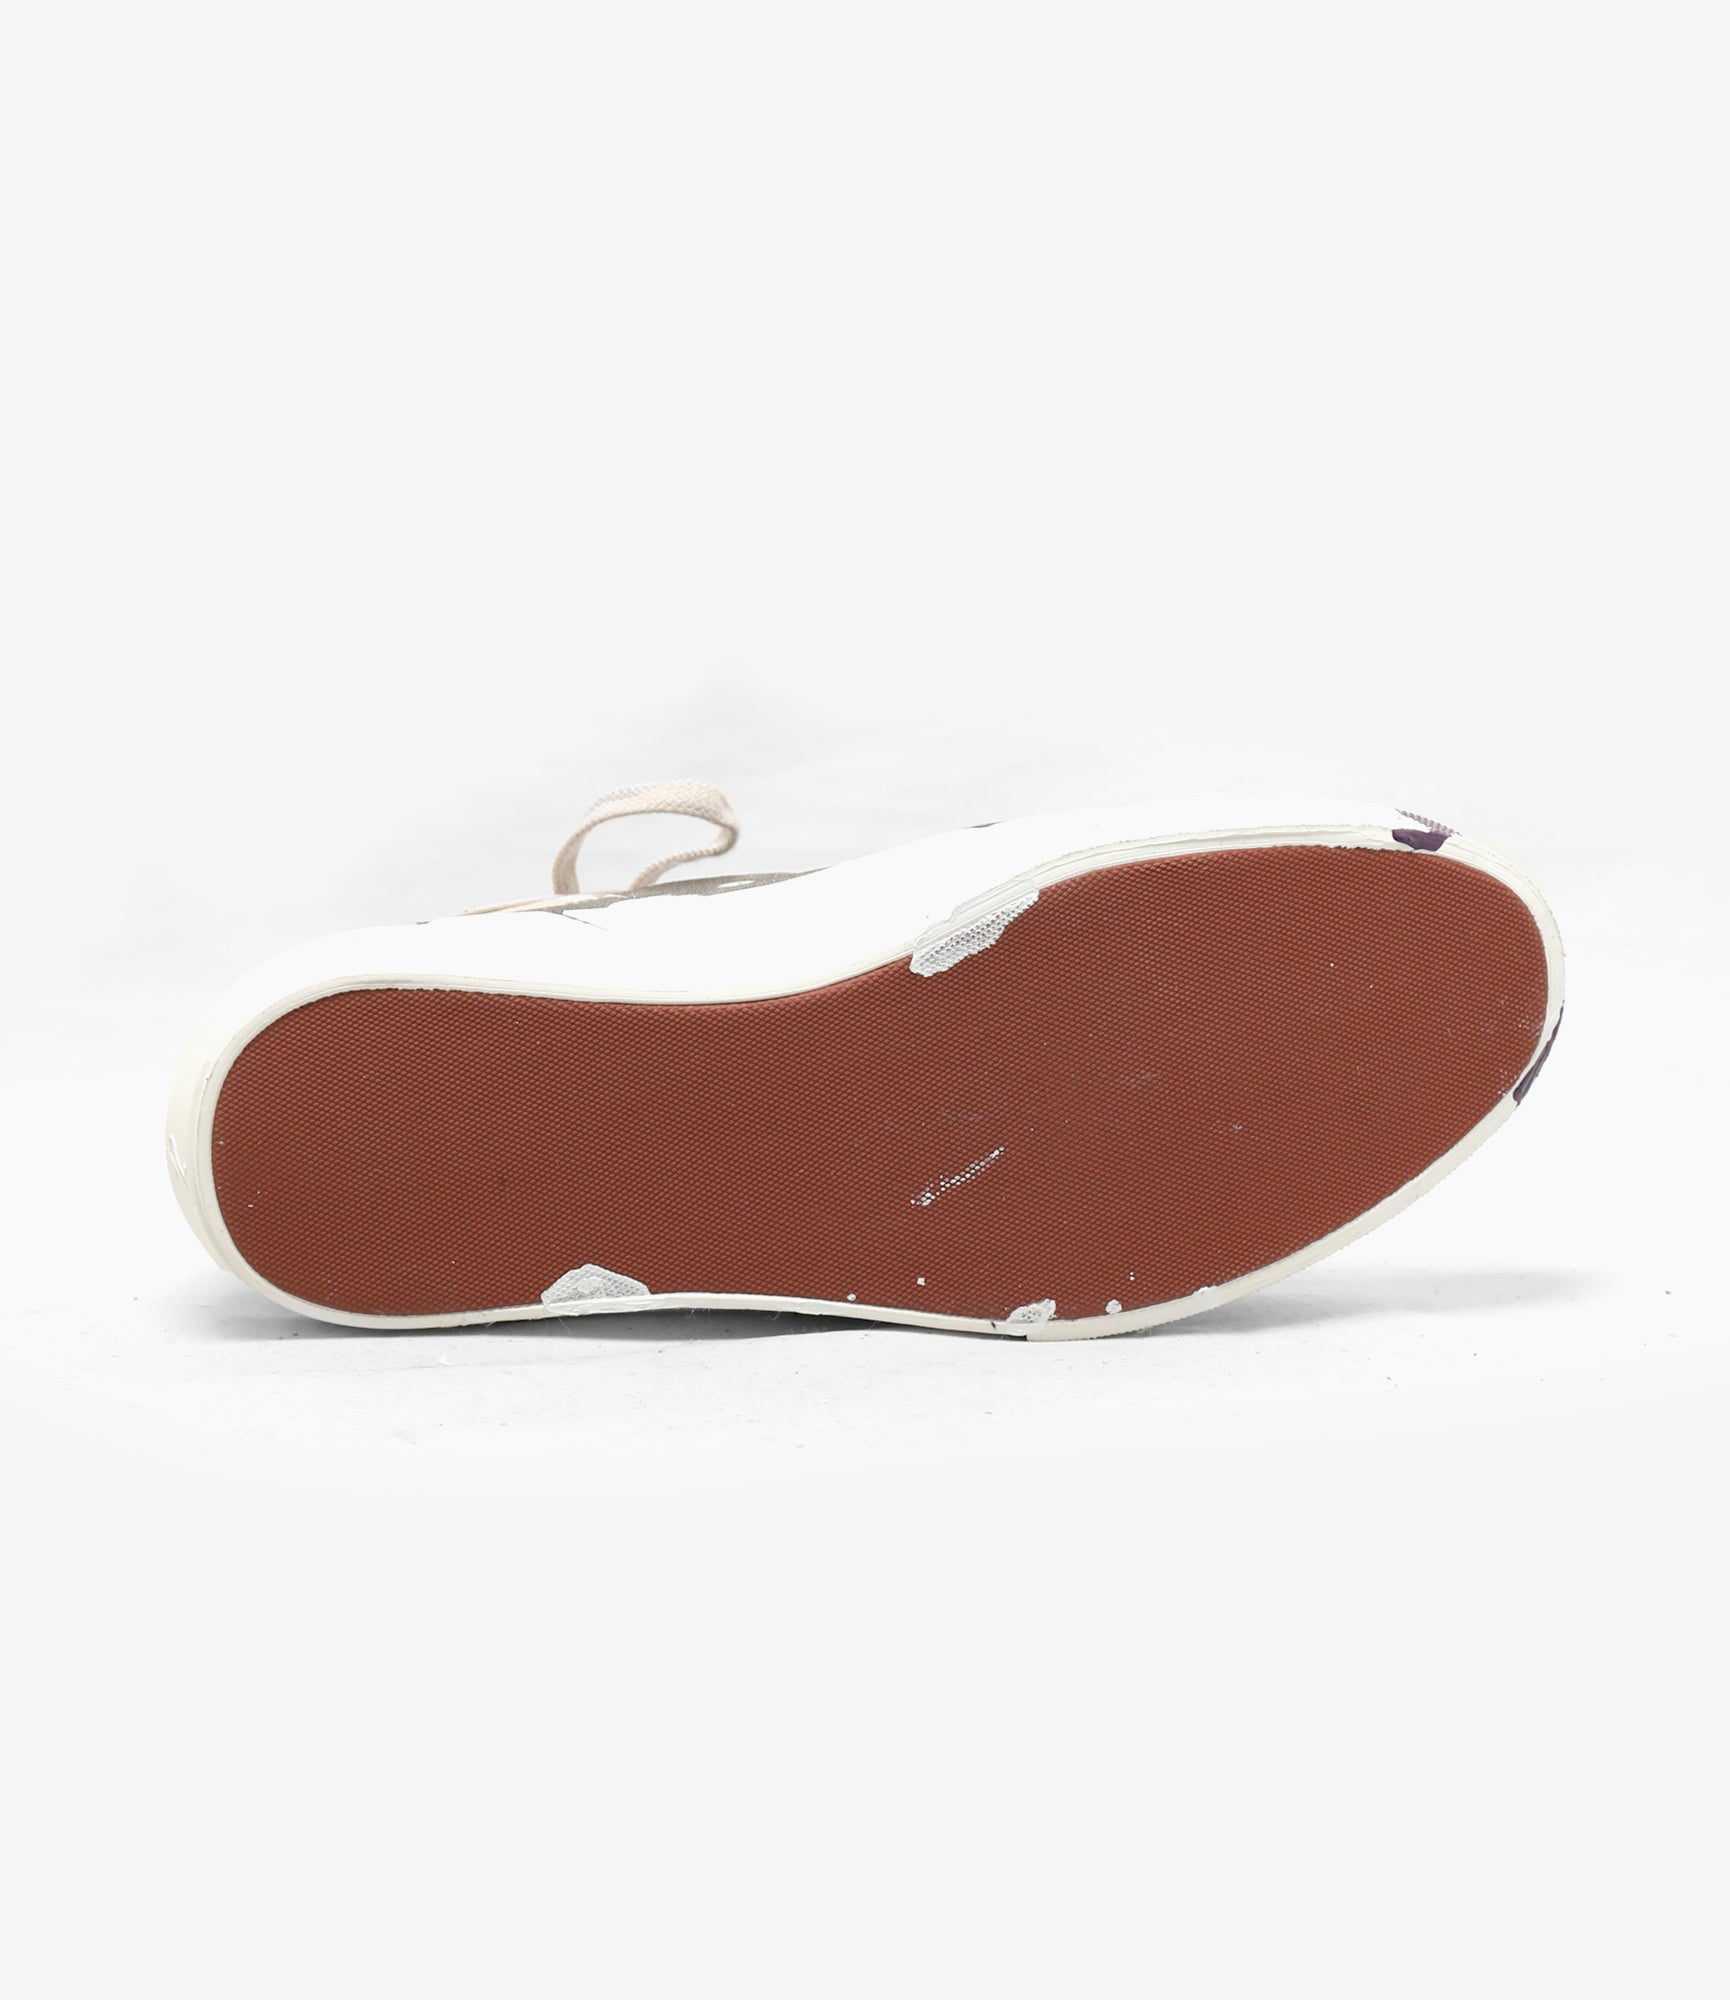 Asymmetric Ghillie Sneaker - Khaki / Paint